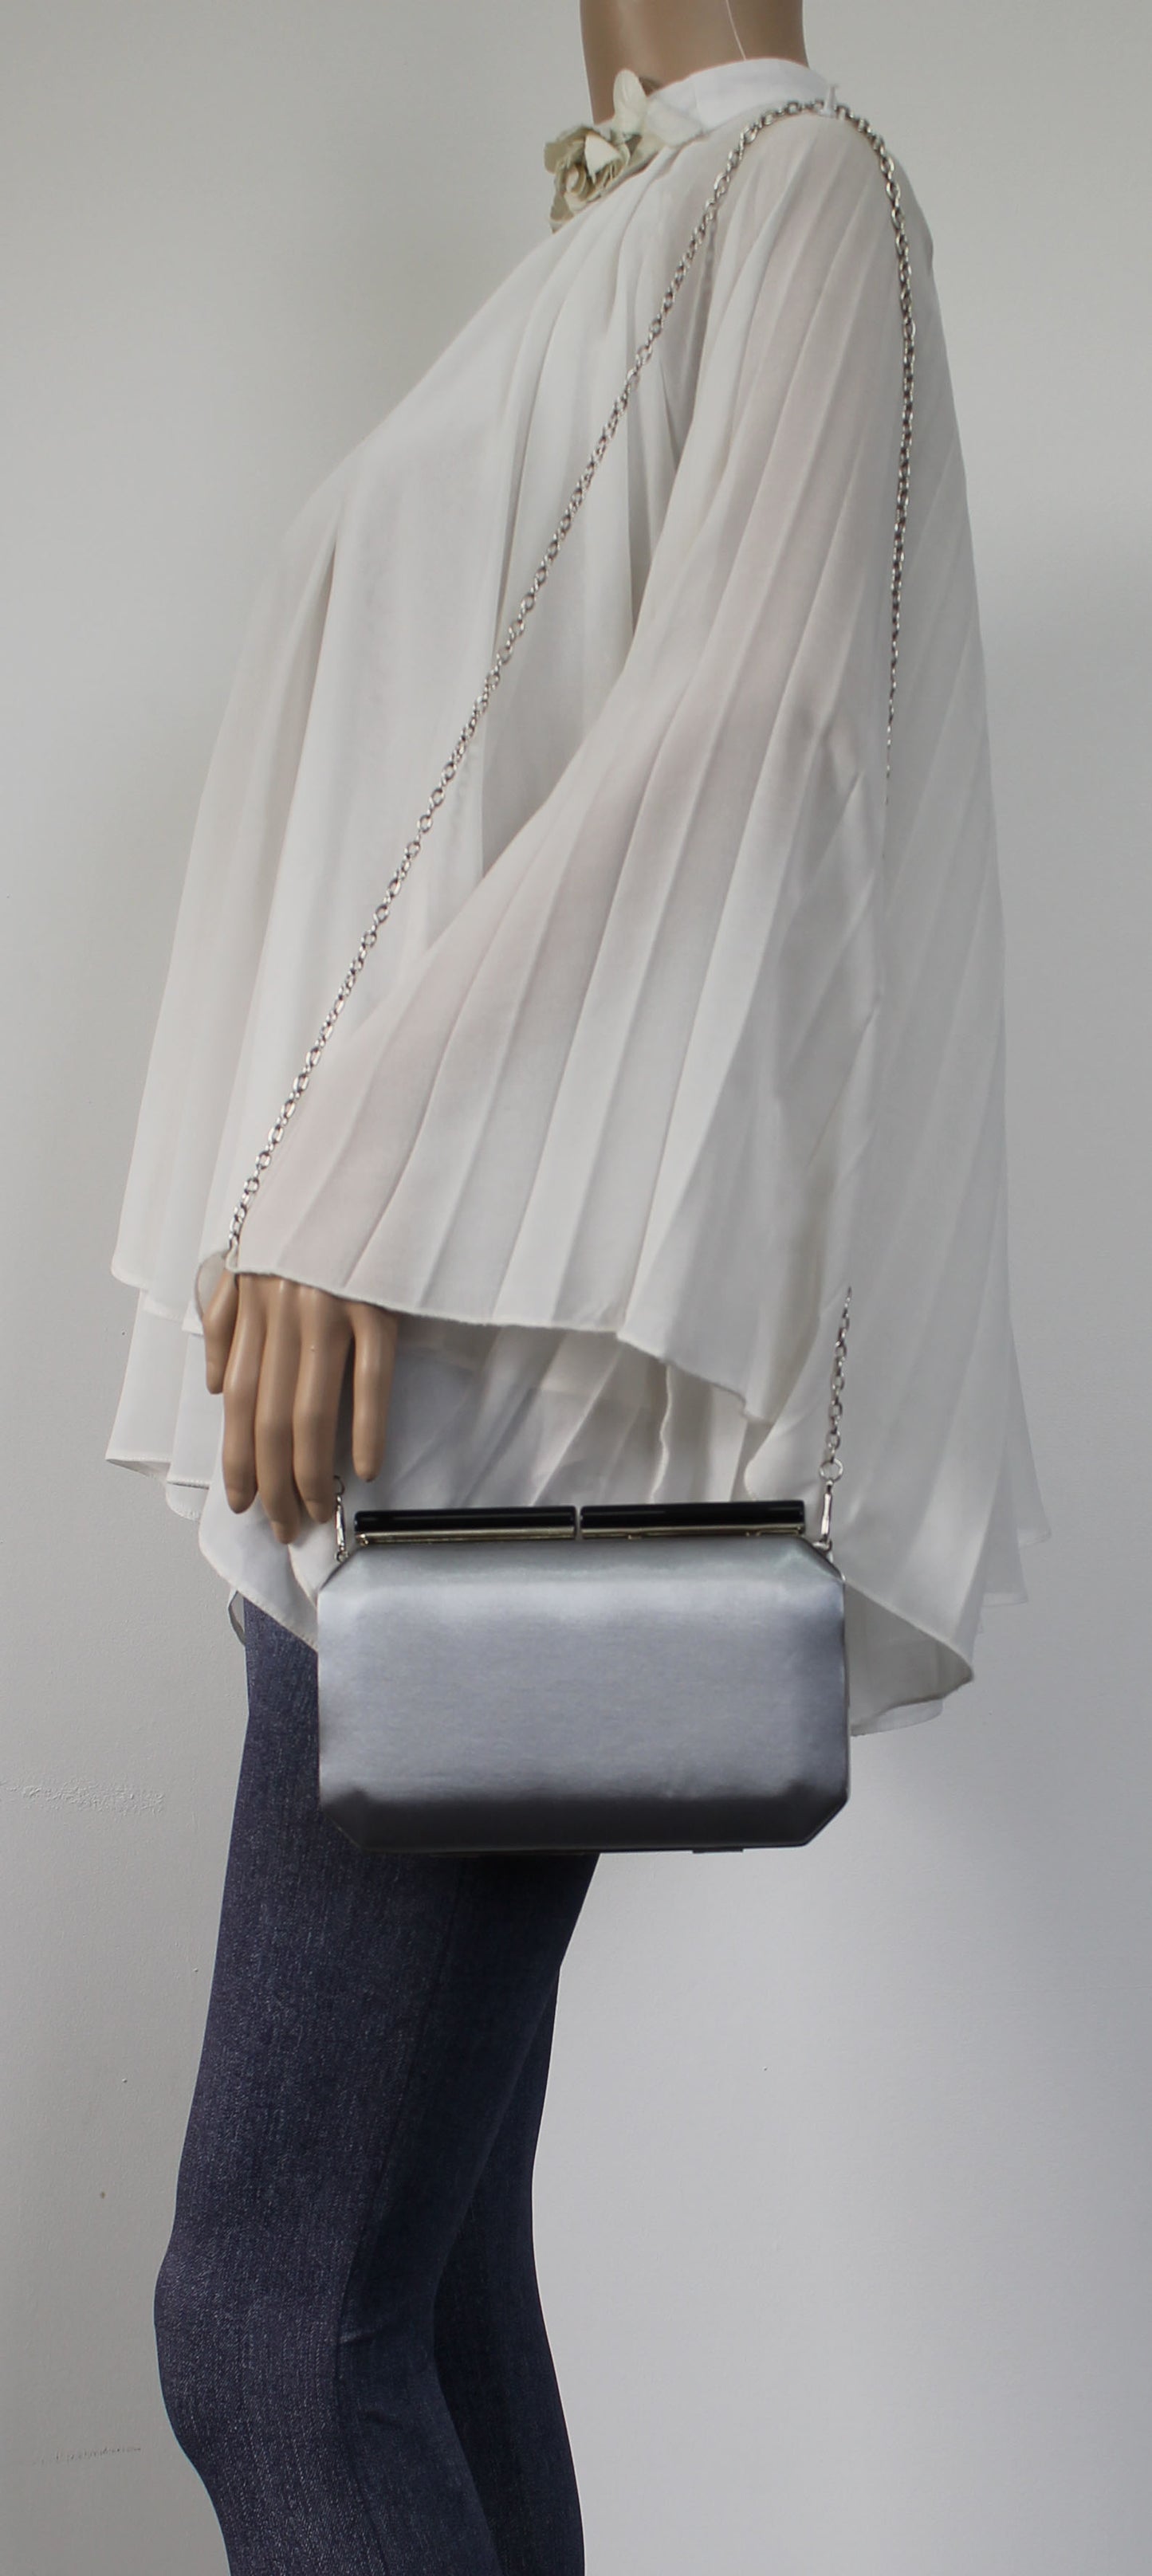 SWANKYSWANS Millie Clutch Bag Silver Cute Cheap Clutch Bag For Weddings School and Work